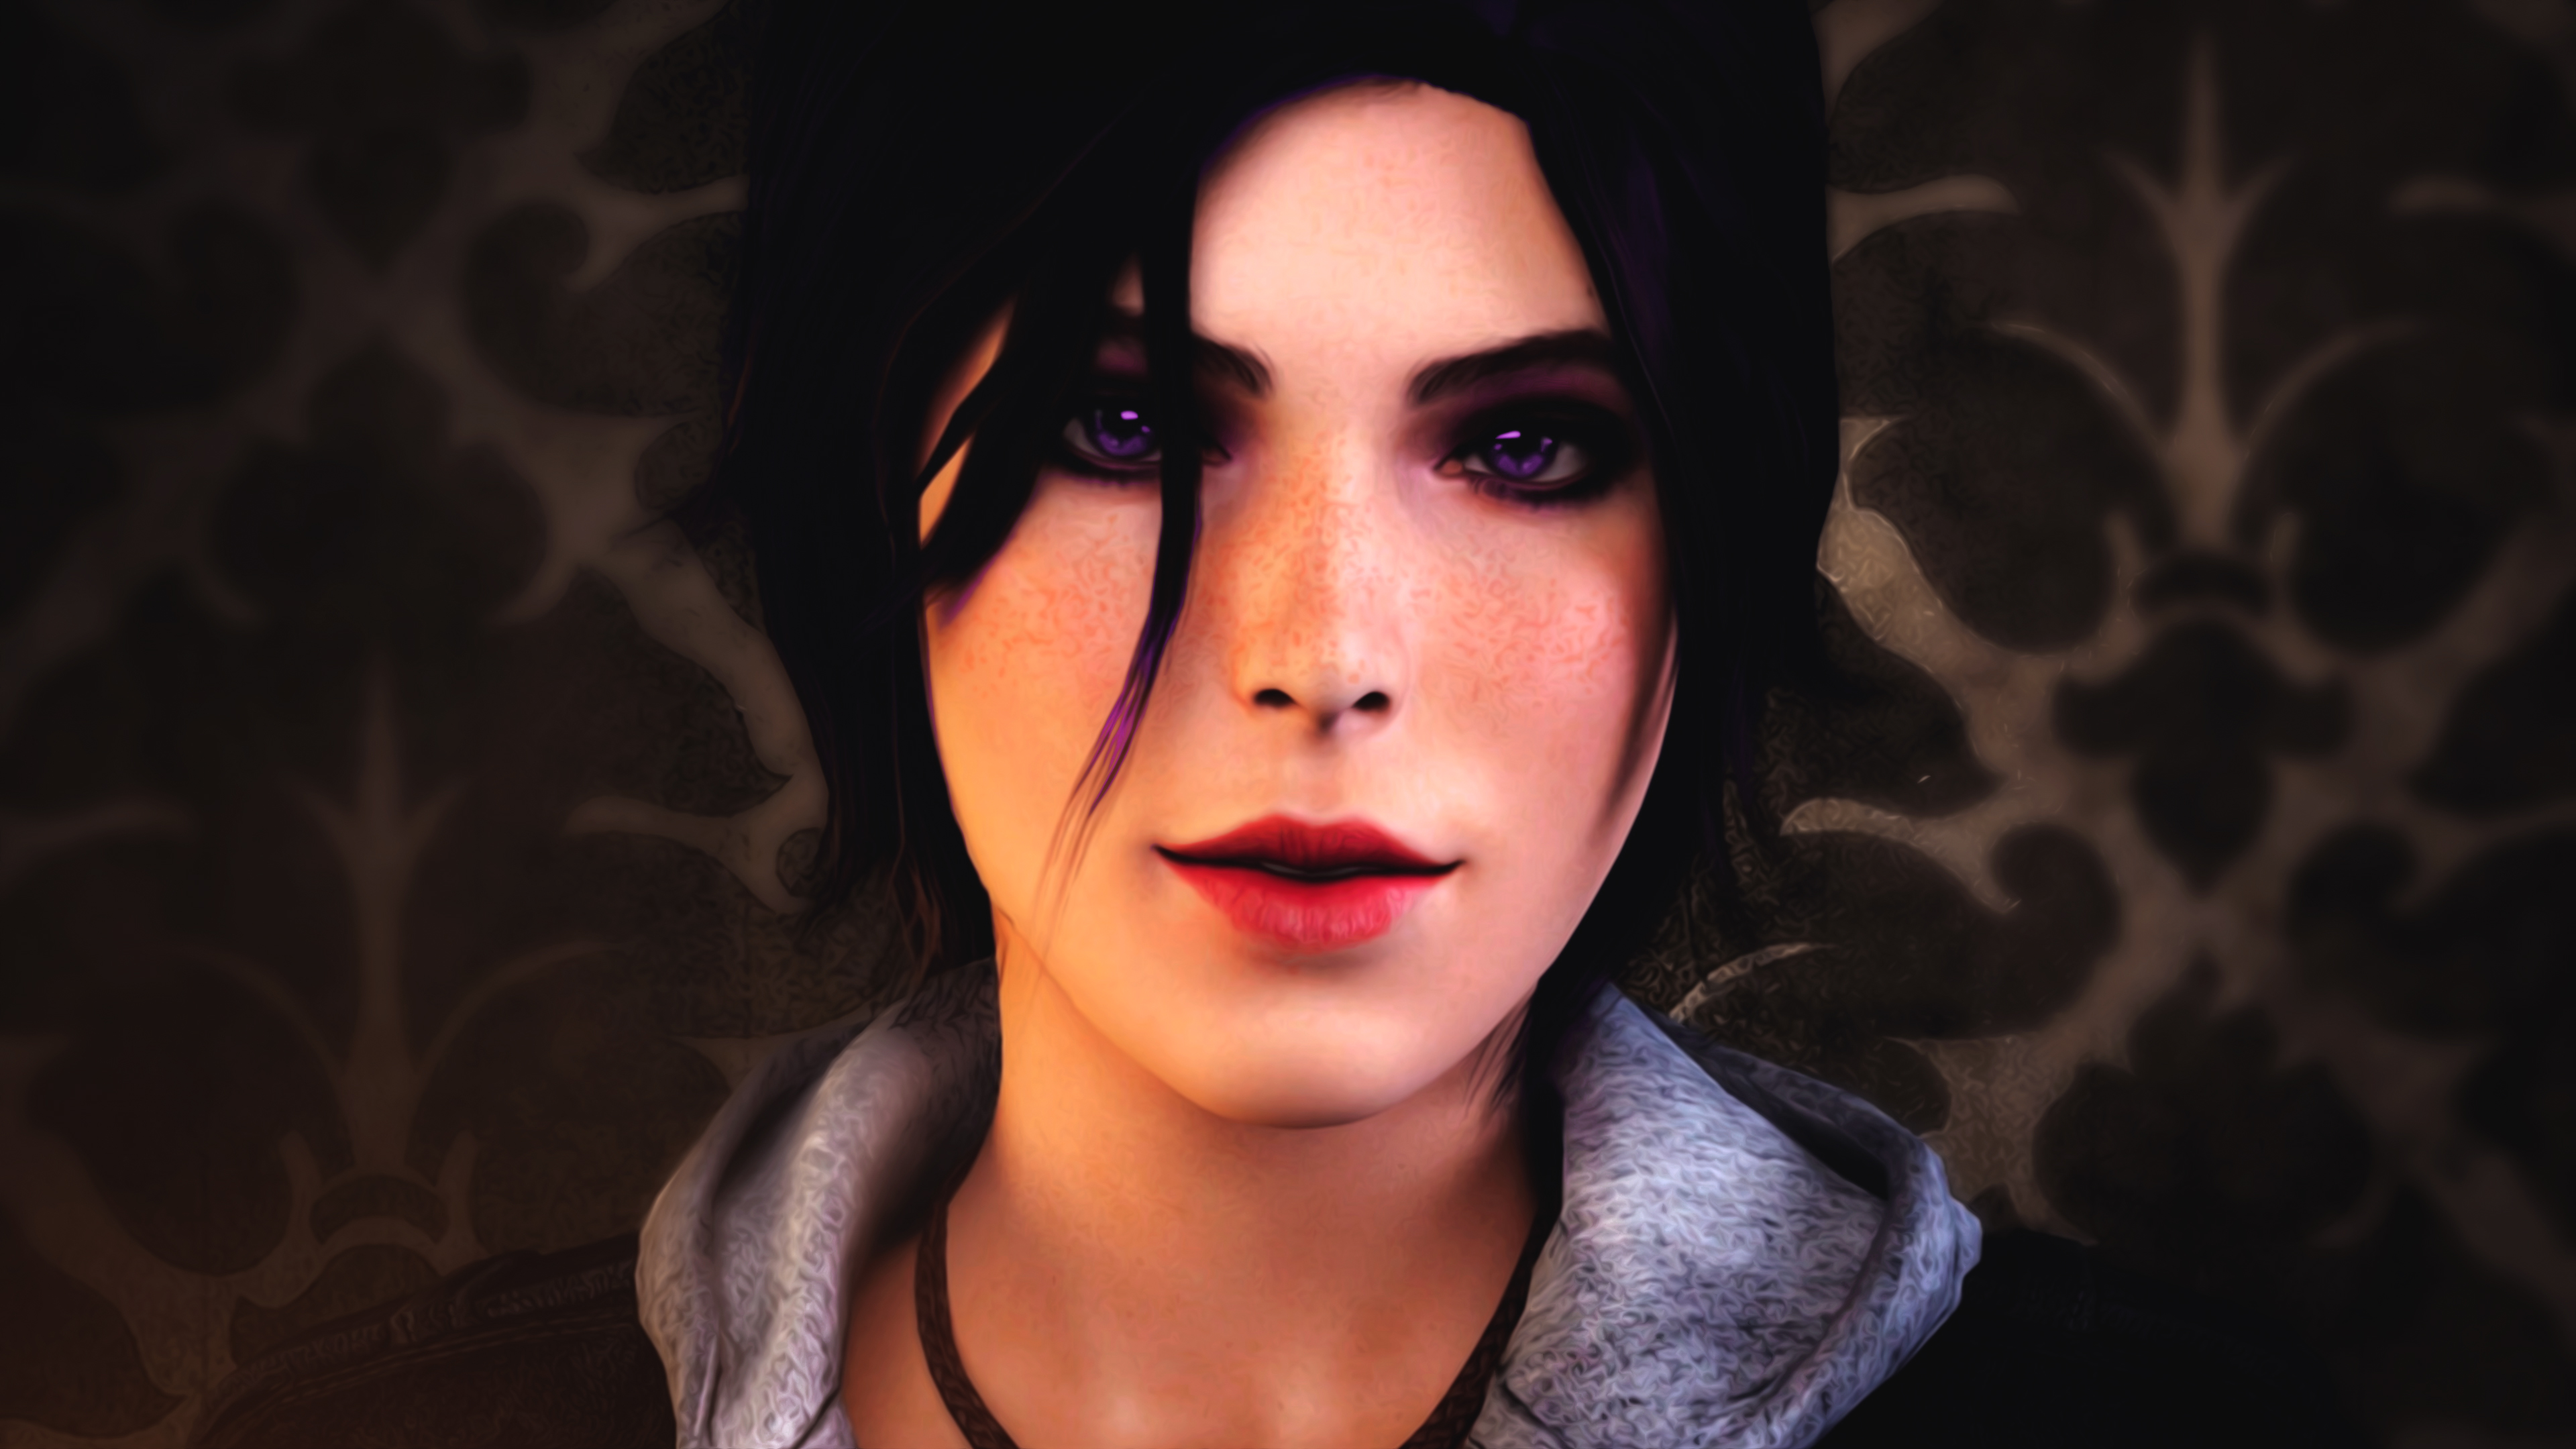 General 3840x2160 dark low light purple eyes Lara Croft (Tomb Raider) video games PC gaming red lipstick video game girls video game characters Tomb Raider women digital art closeup